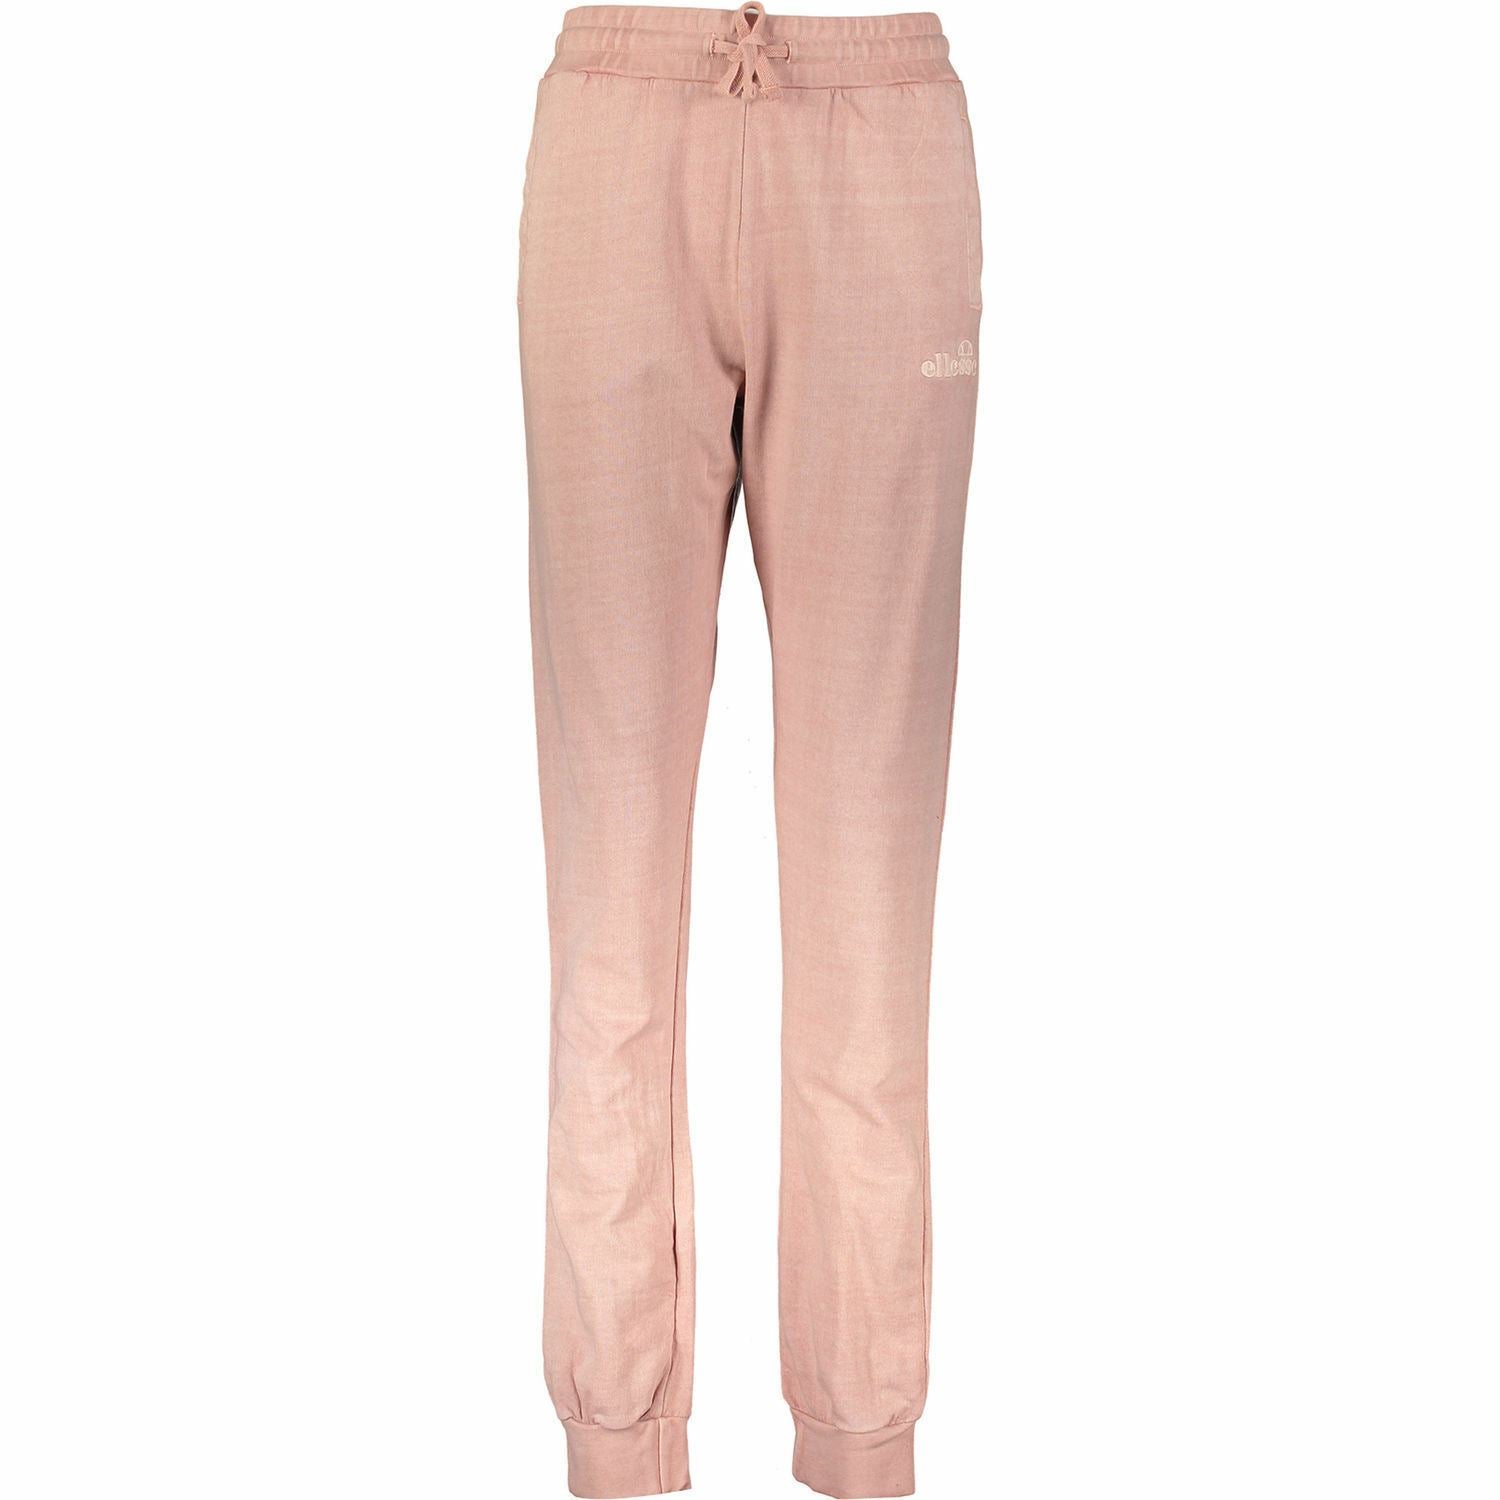 ELLESSE Women's SOFIA Jogging Bottoms Trousers  Pink Size Medium